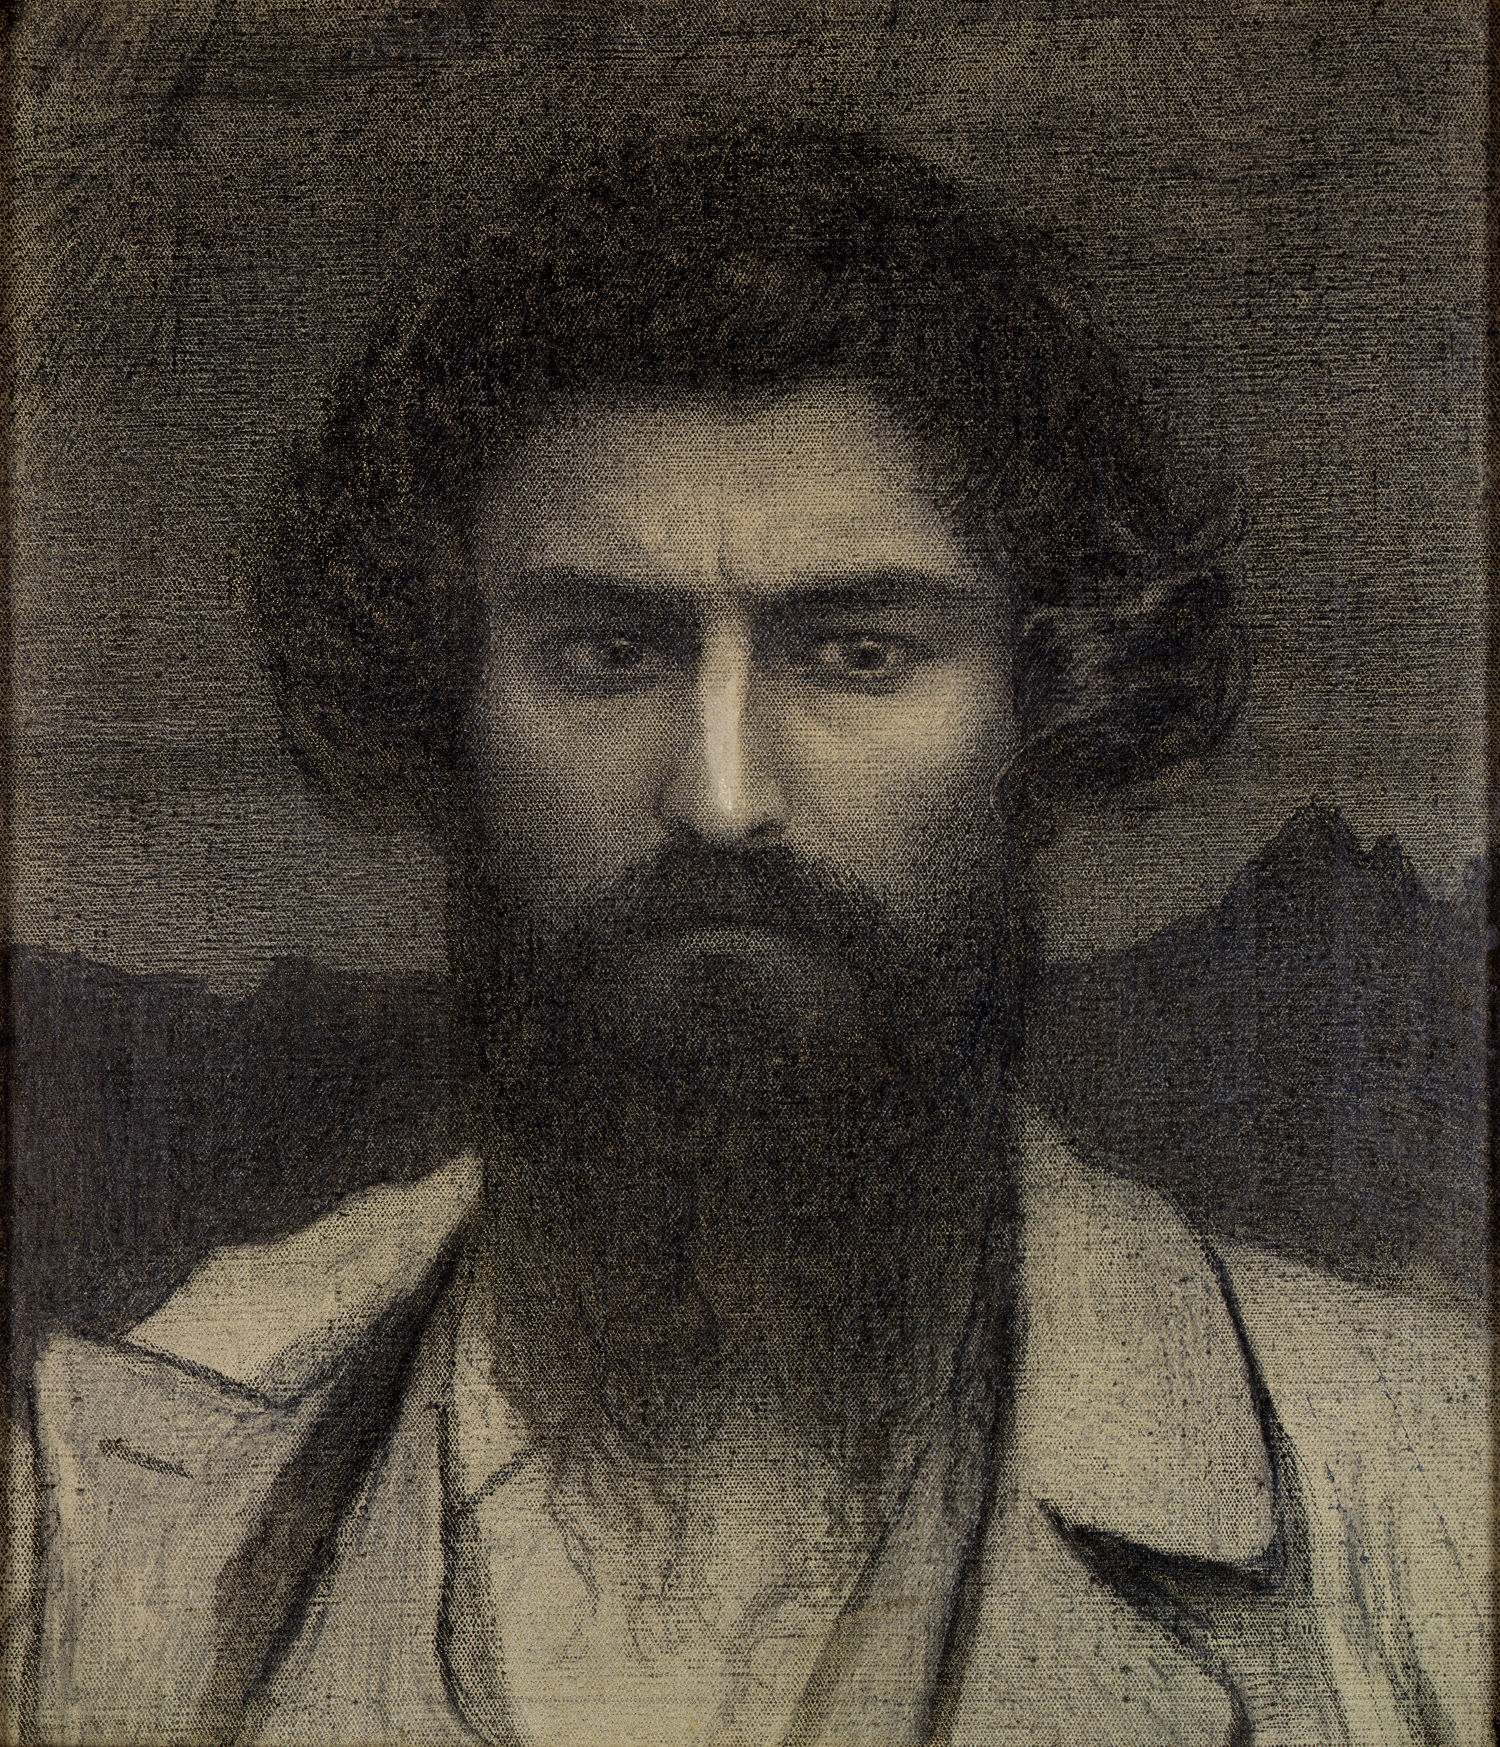 Giovanni Segantini - janvier 15, 1858 - septembre 28, 1899